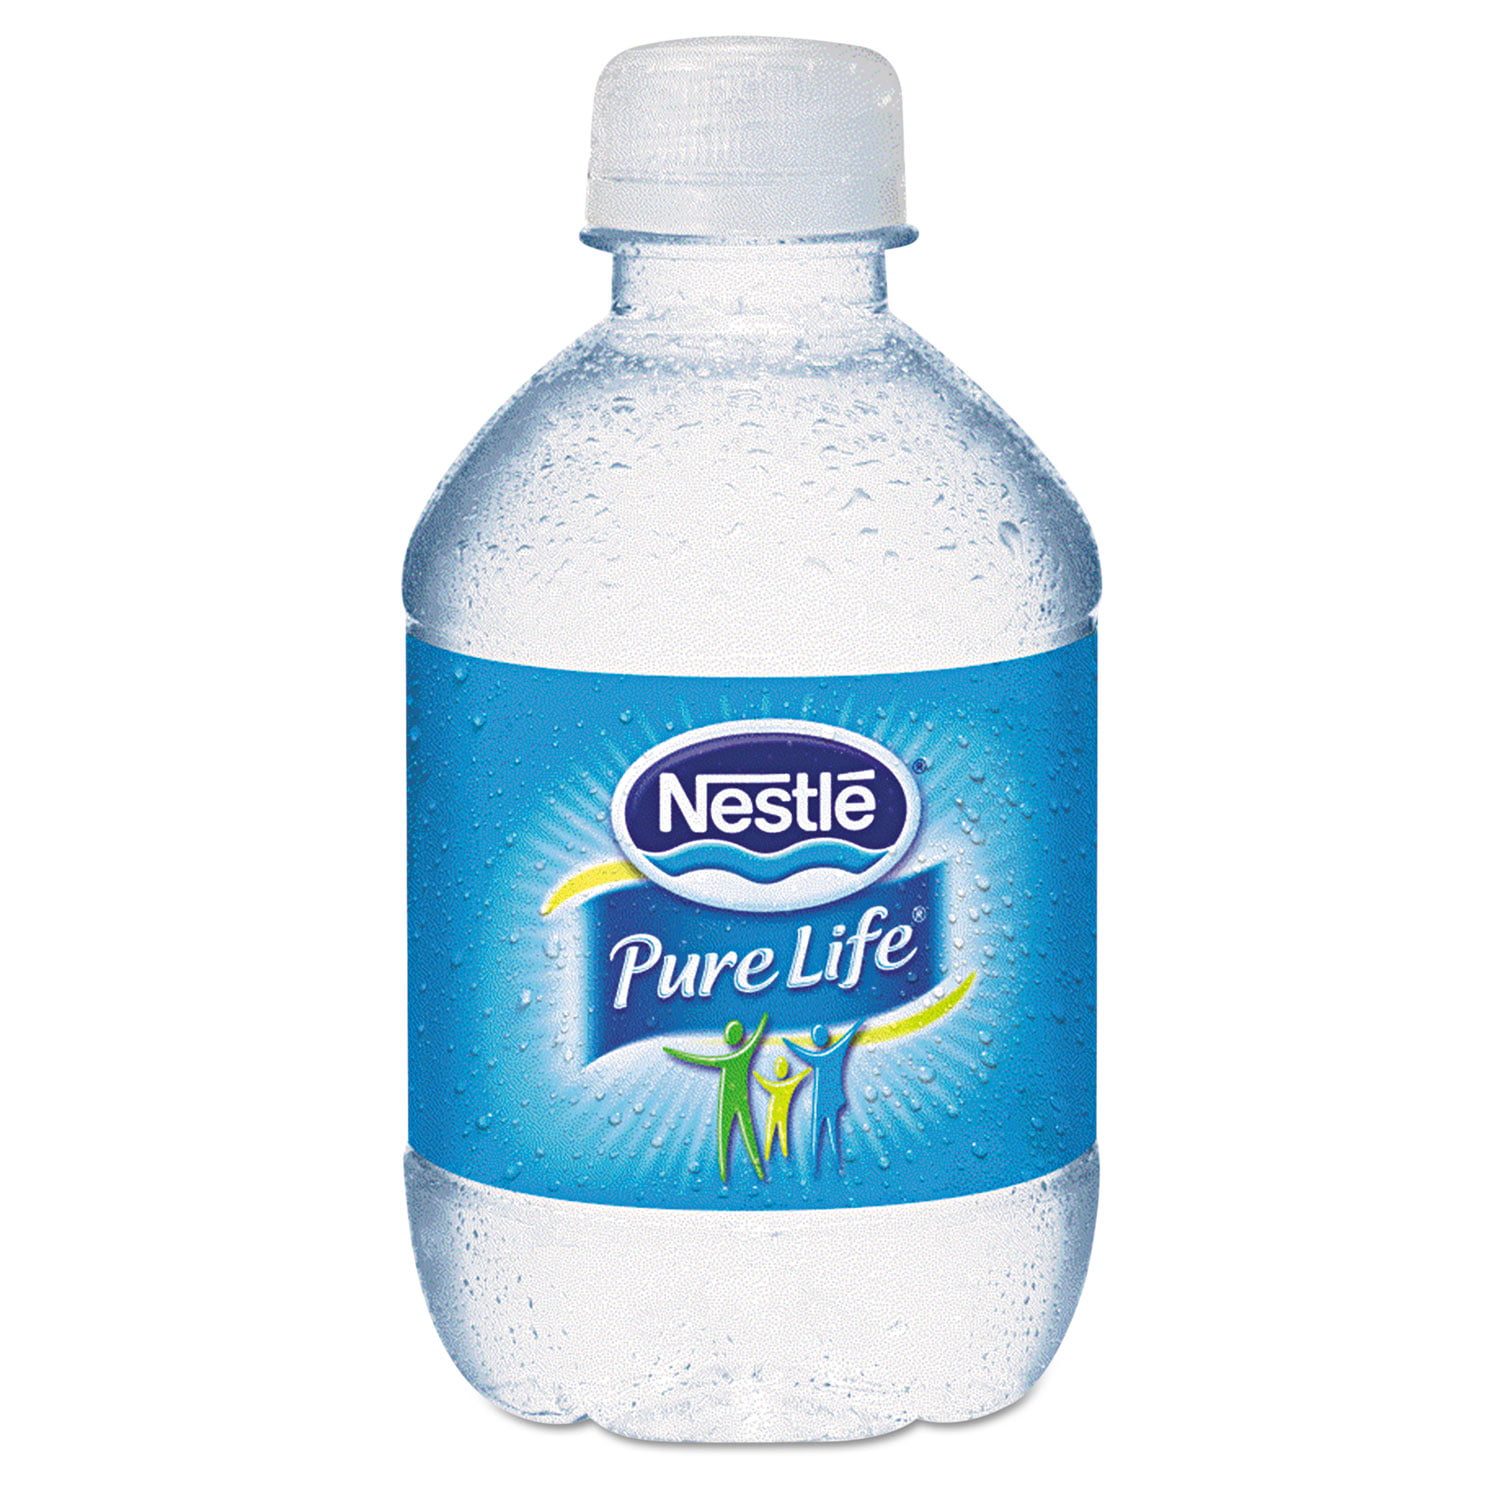 Nestle Pure Life Pure Life Purified Water 8 oz Bottle 48/Carton 12256656